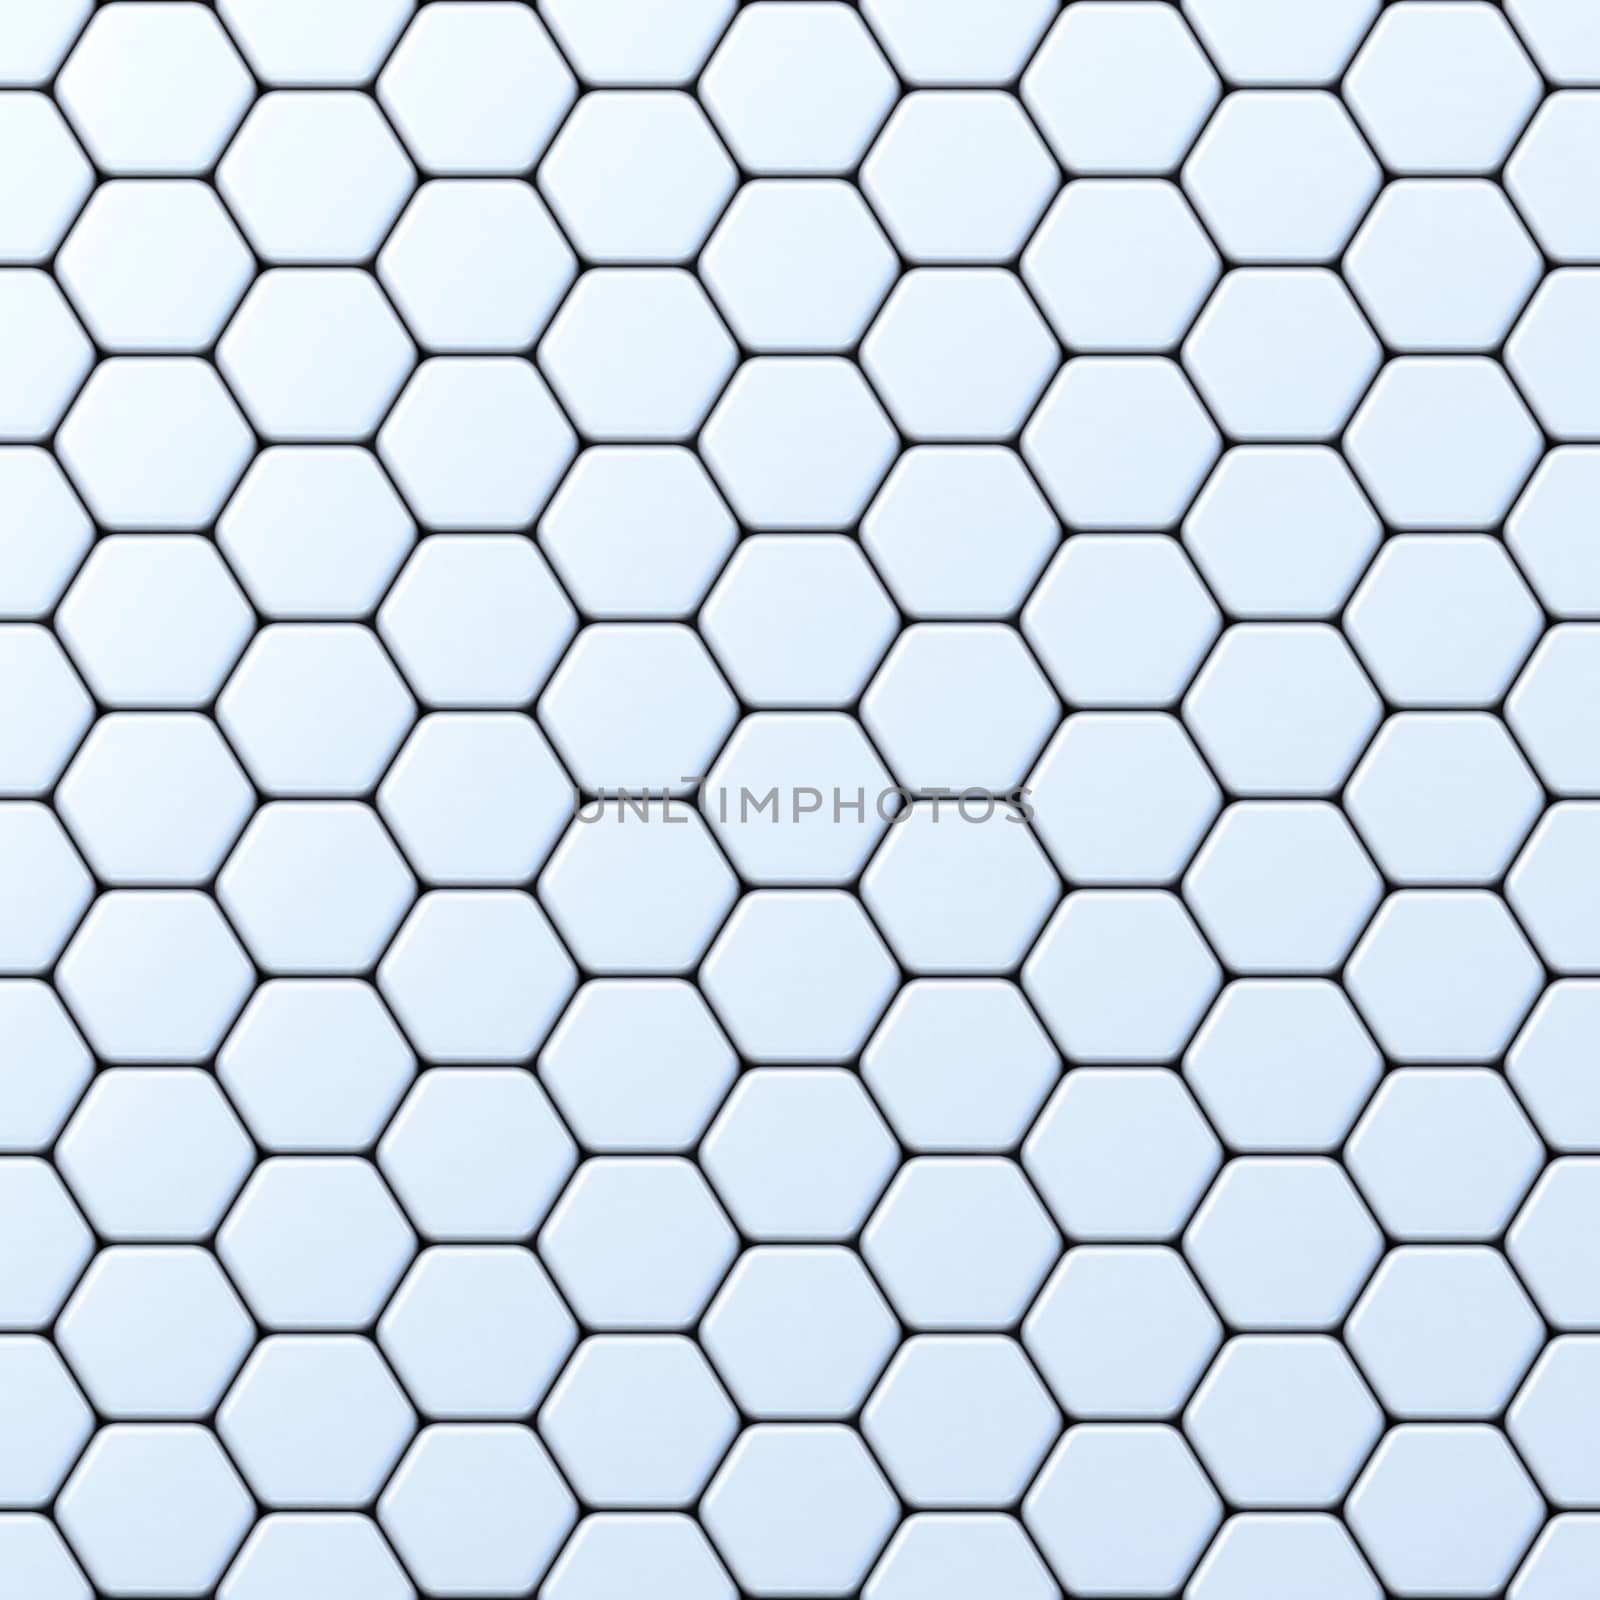 Hexagonal grid 3D render illustration